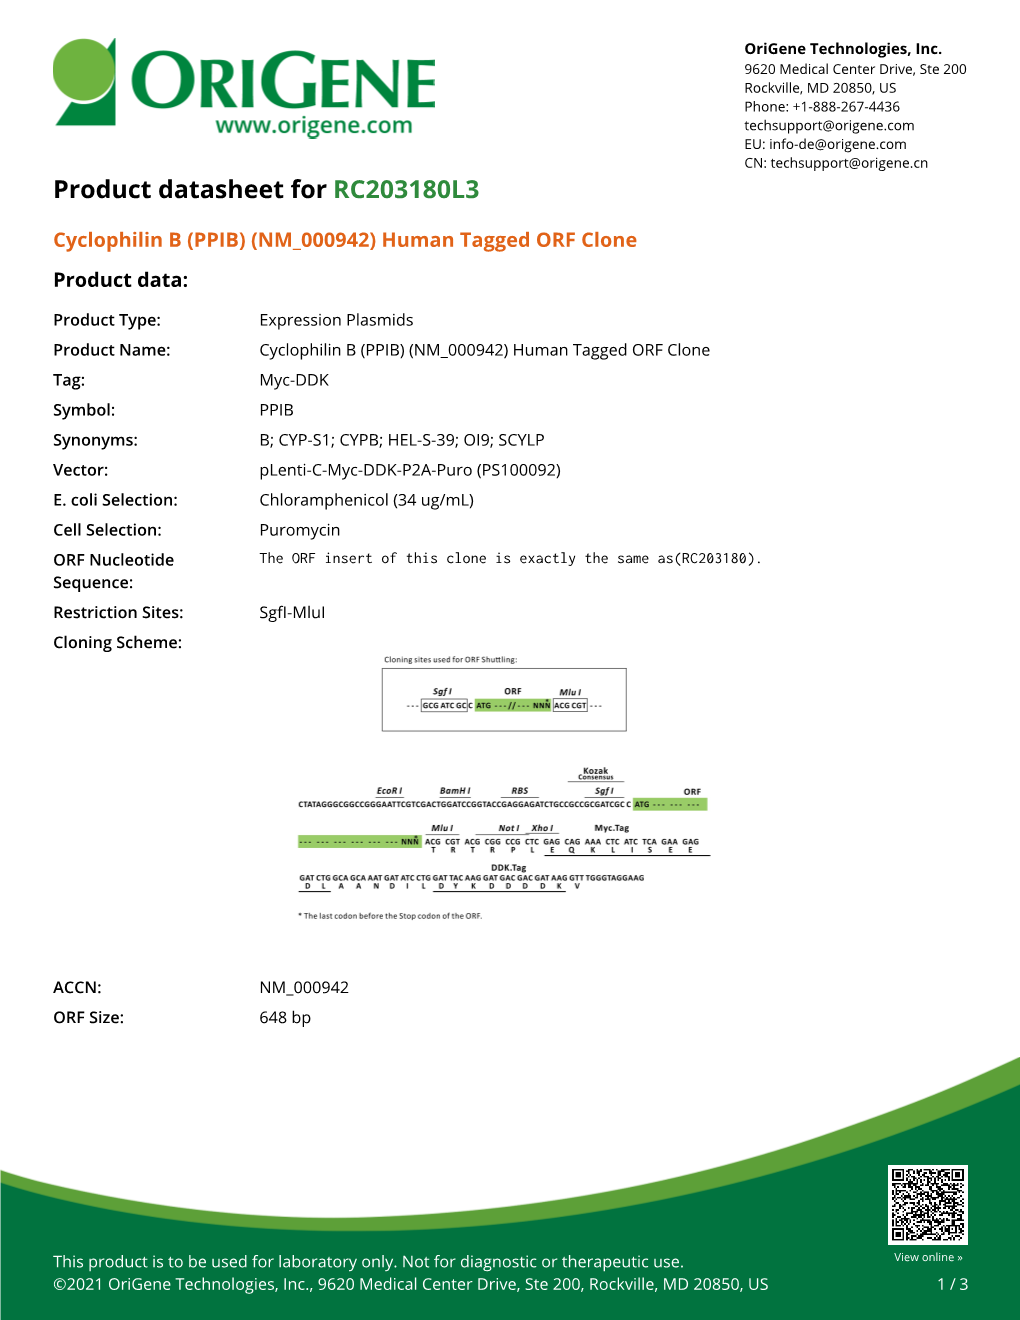 Cyclophilin B (PPIB) (NM 000942) Human Tagged ORF Clone Product Data